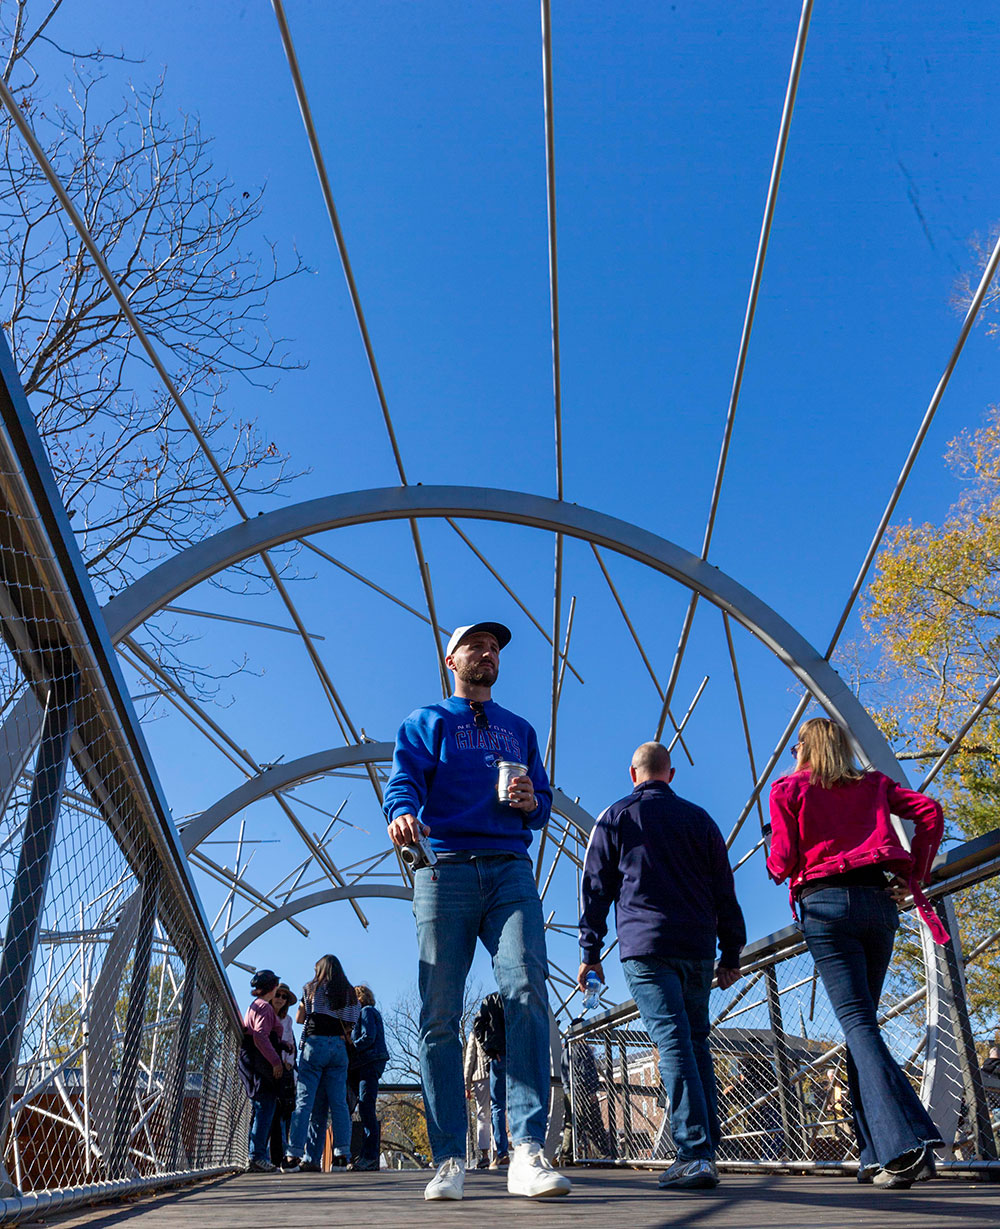 The Skywalk Bridge lifts visitors 17 feet into the air.